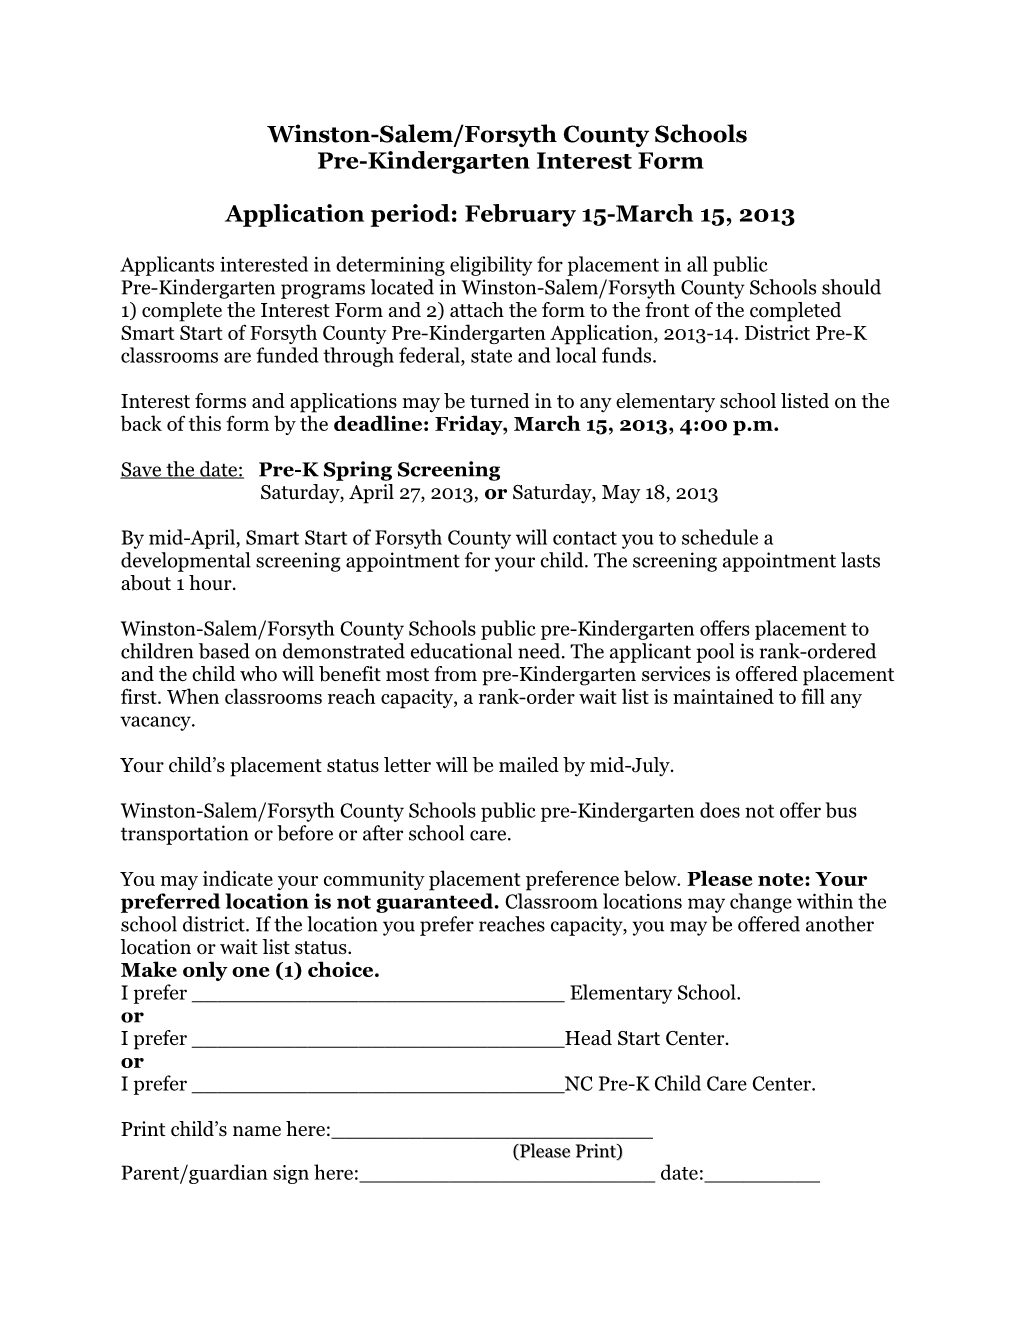 Winston-Salem/Forsyth County Schools Pre-Kindergarten Interest Form